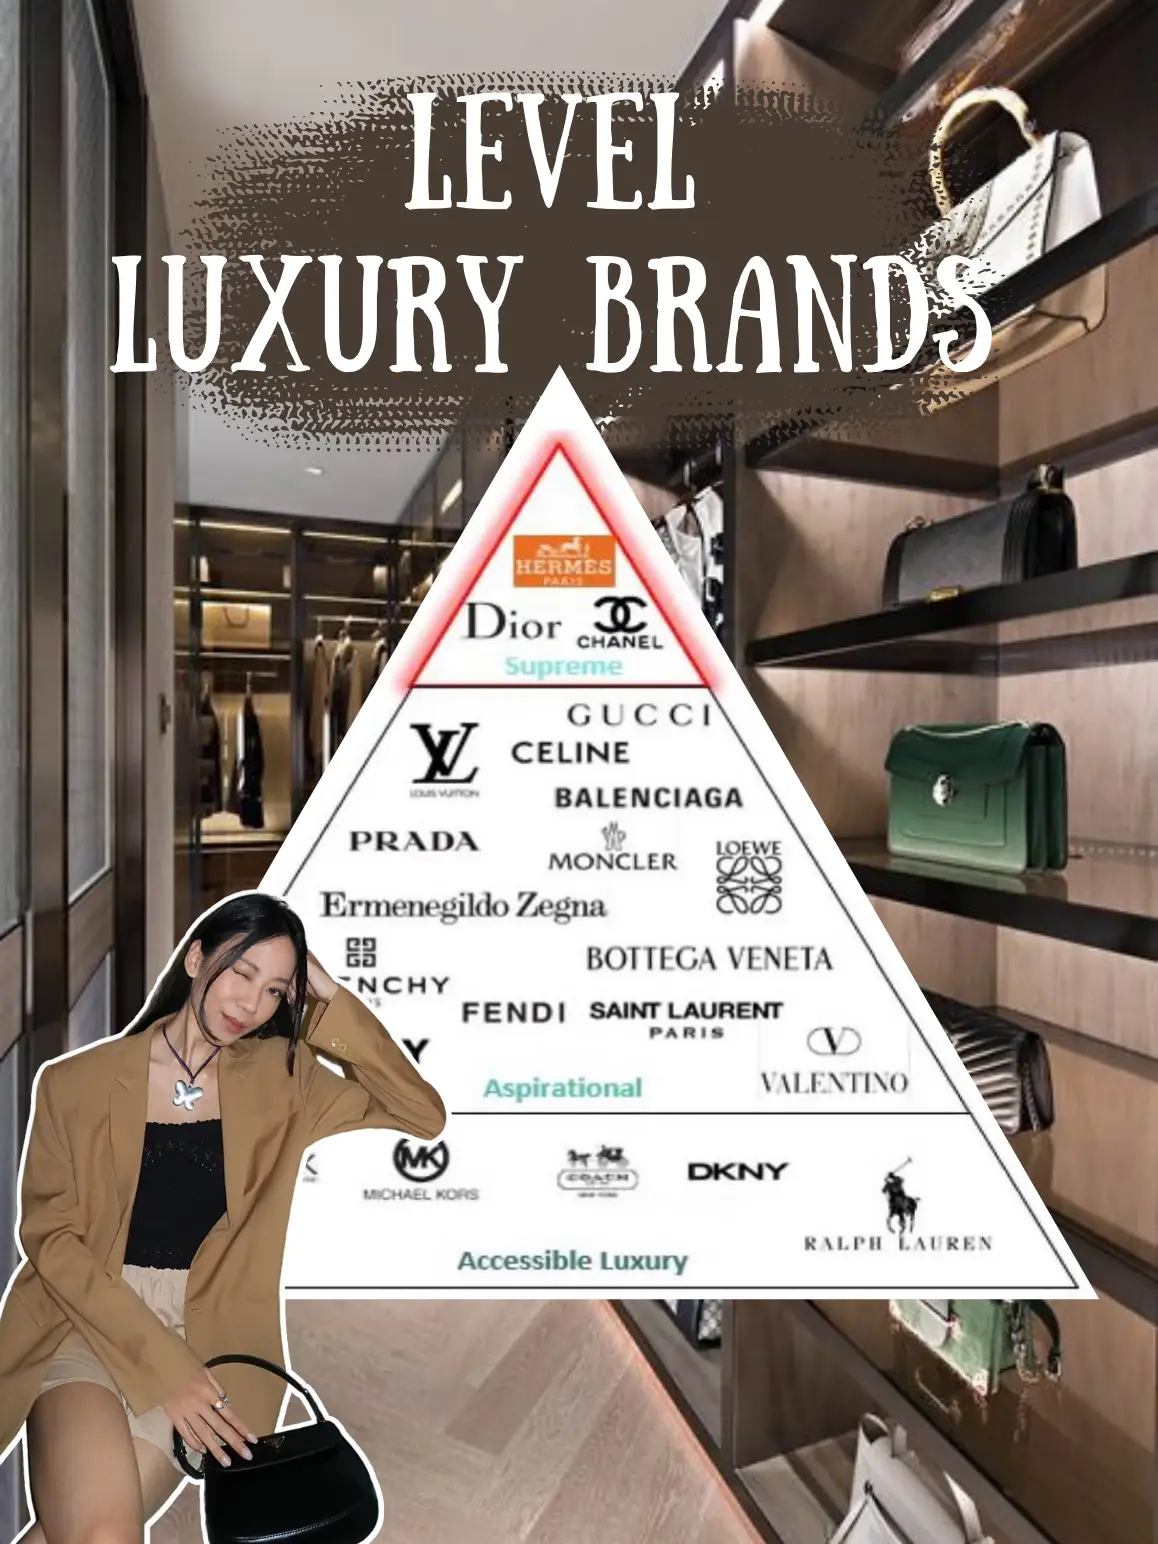 high end luxury brands luxury pyramid  Desain, Gambar desain busana,  Desain busana